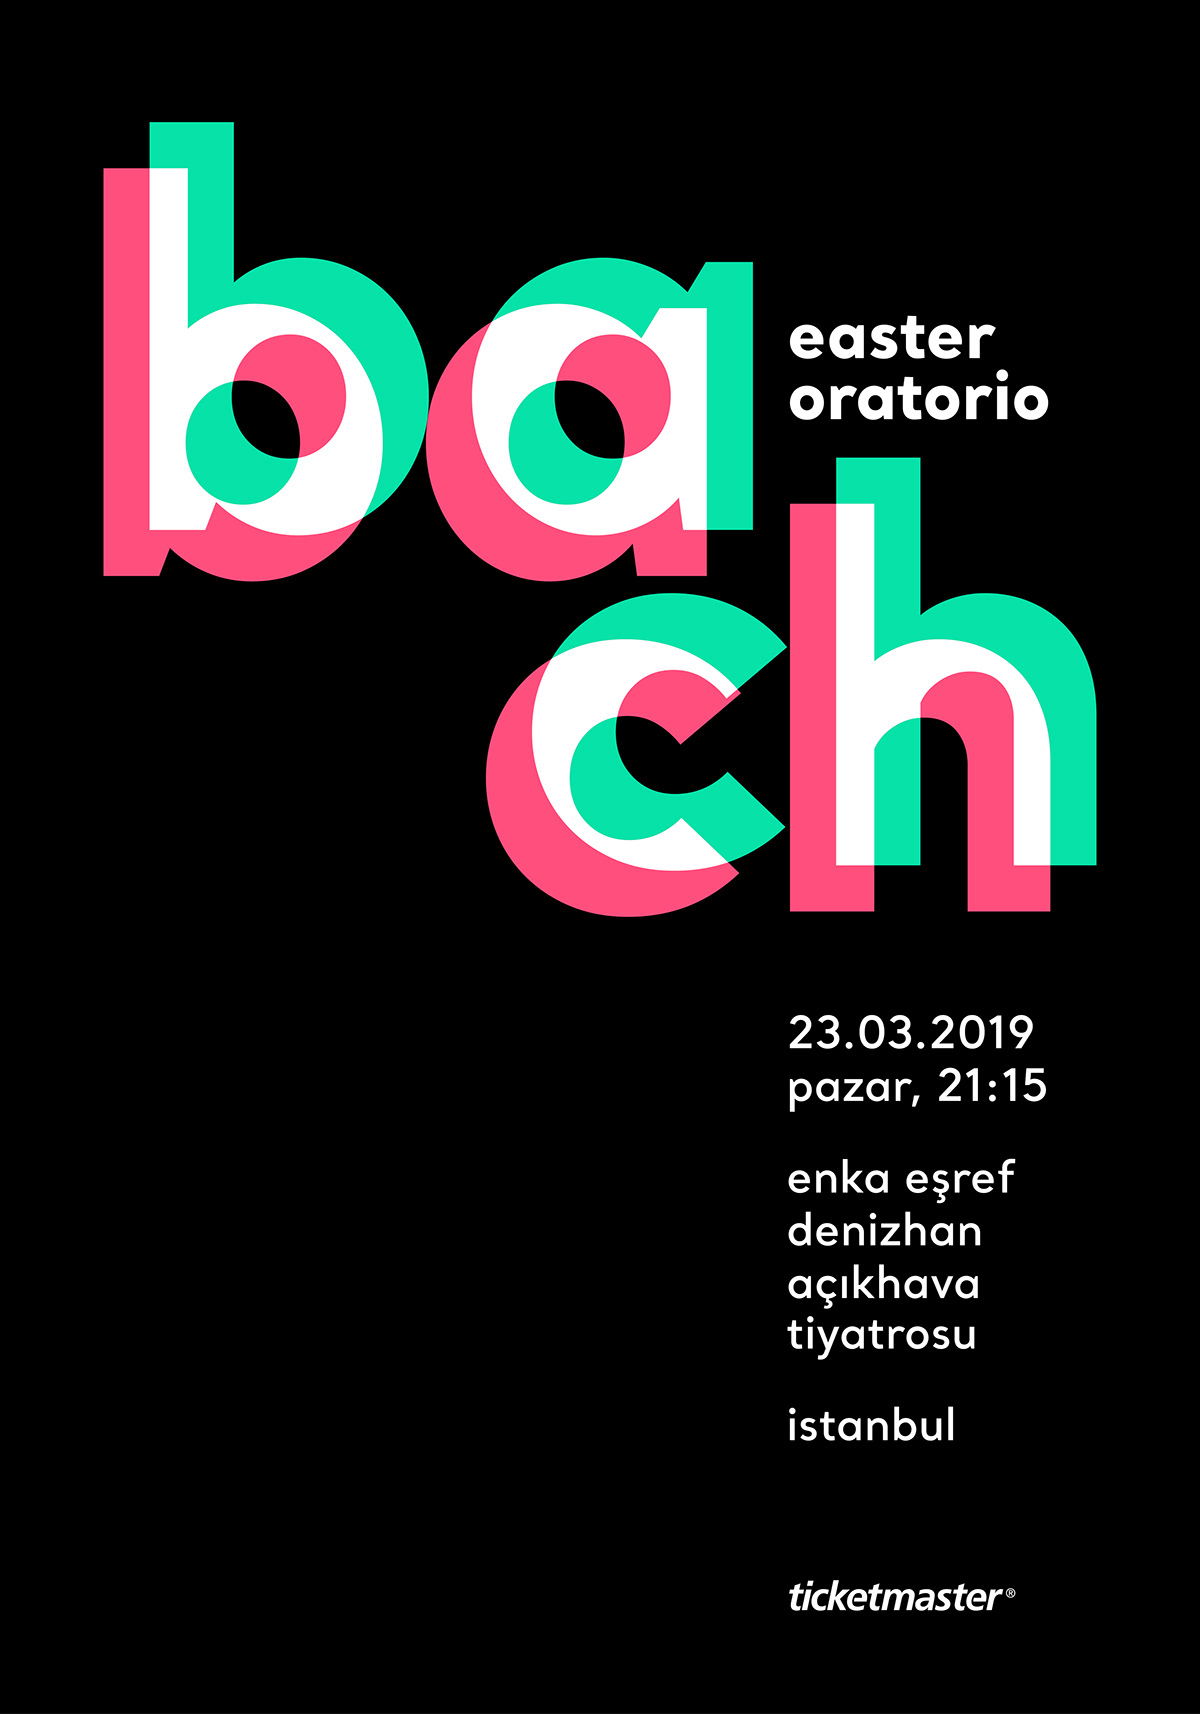 bach evolution bach evolution Johann Sebastian Bach classical music poster music poster typography   adobeawards